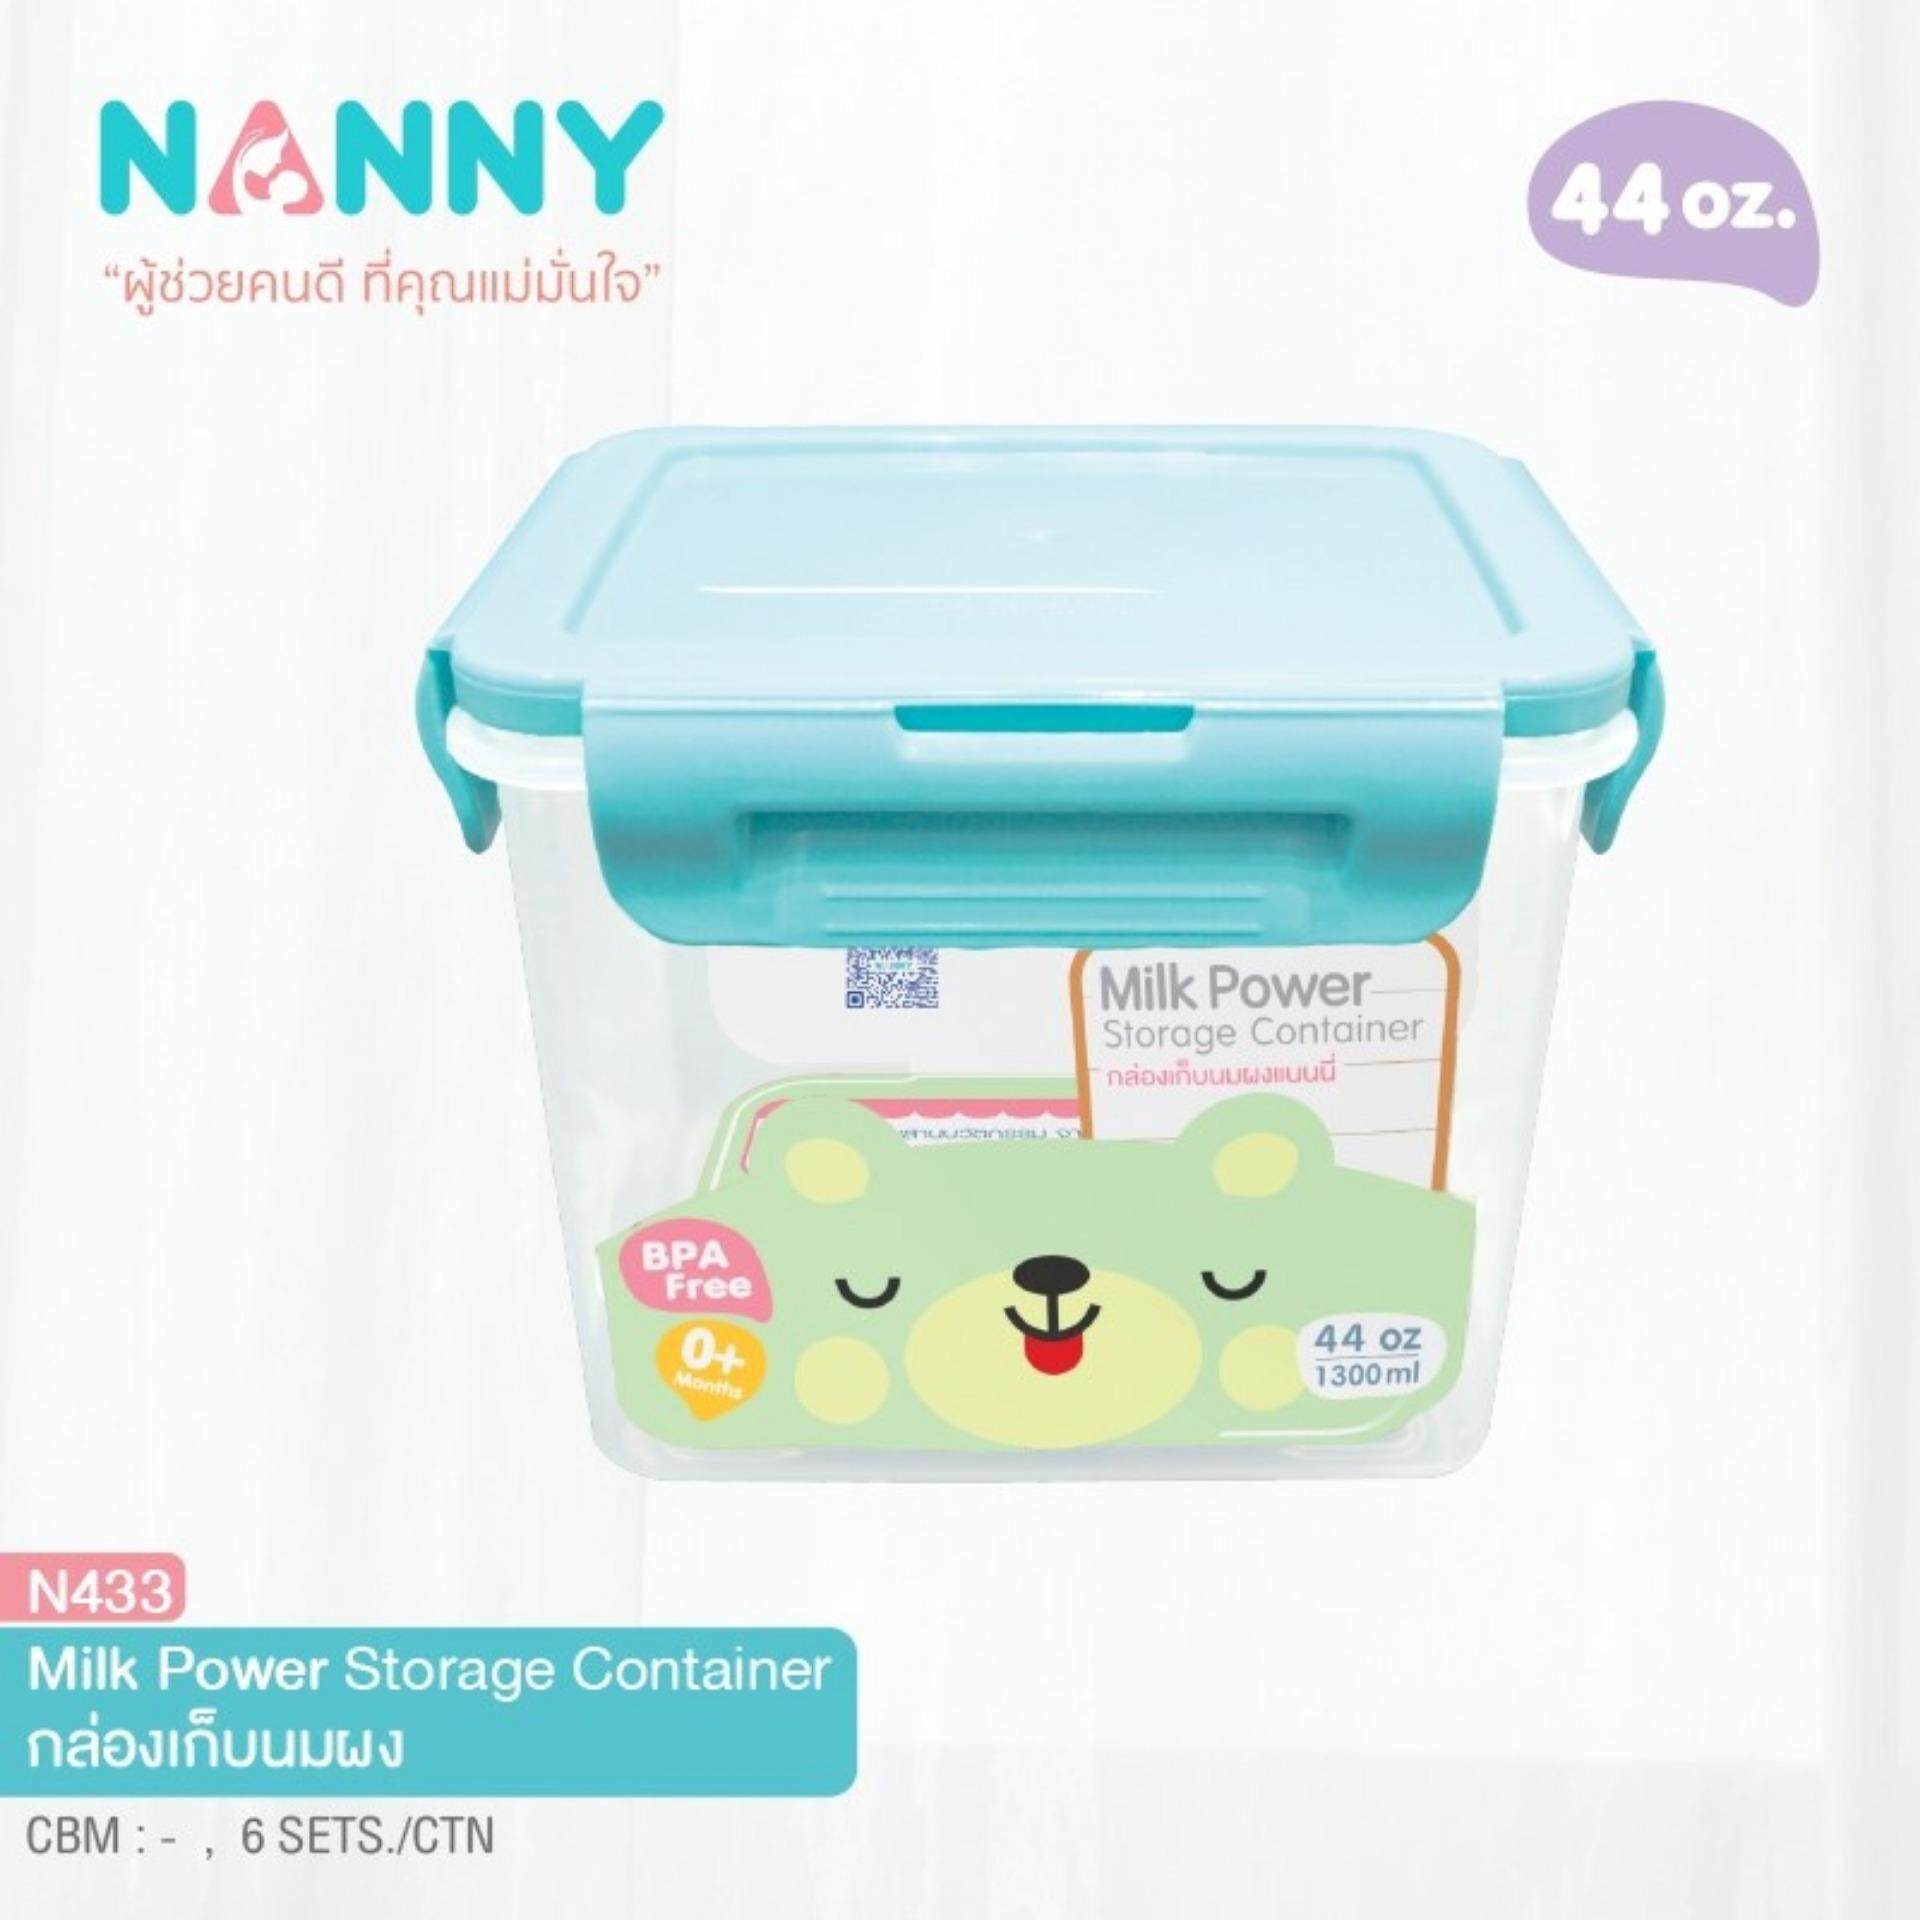 Nanny กล่องเก็บนมผง 1300 ml. N433